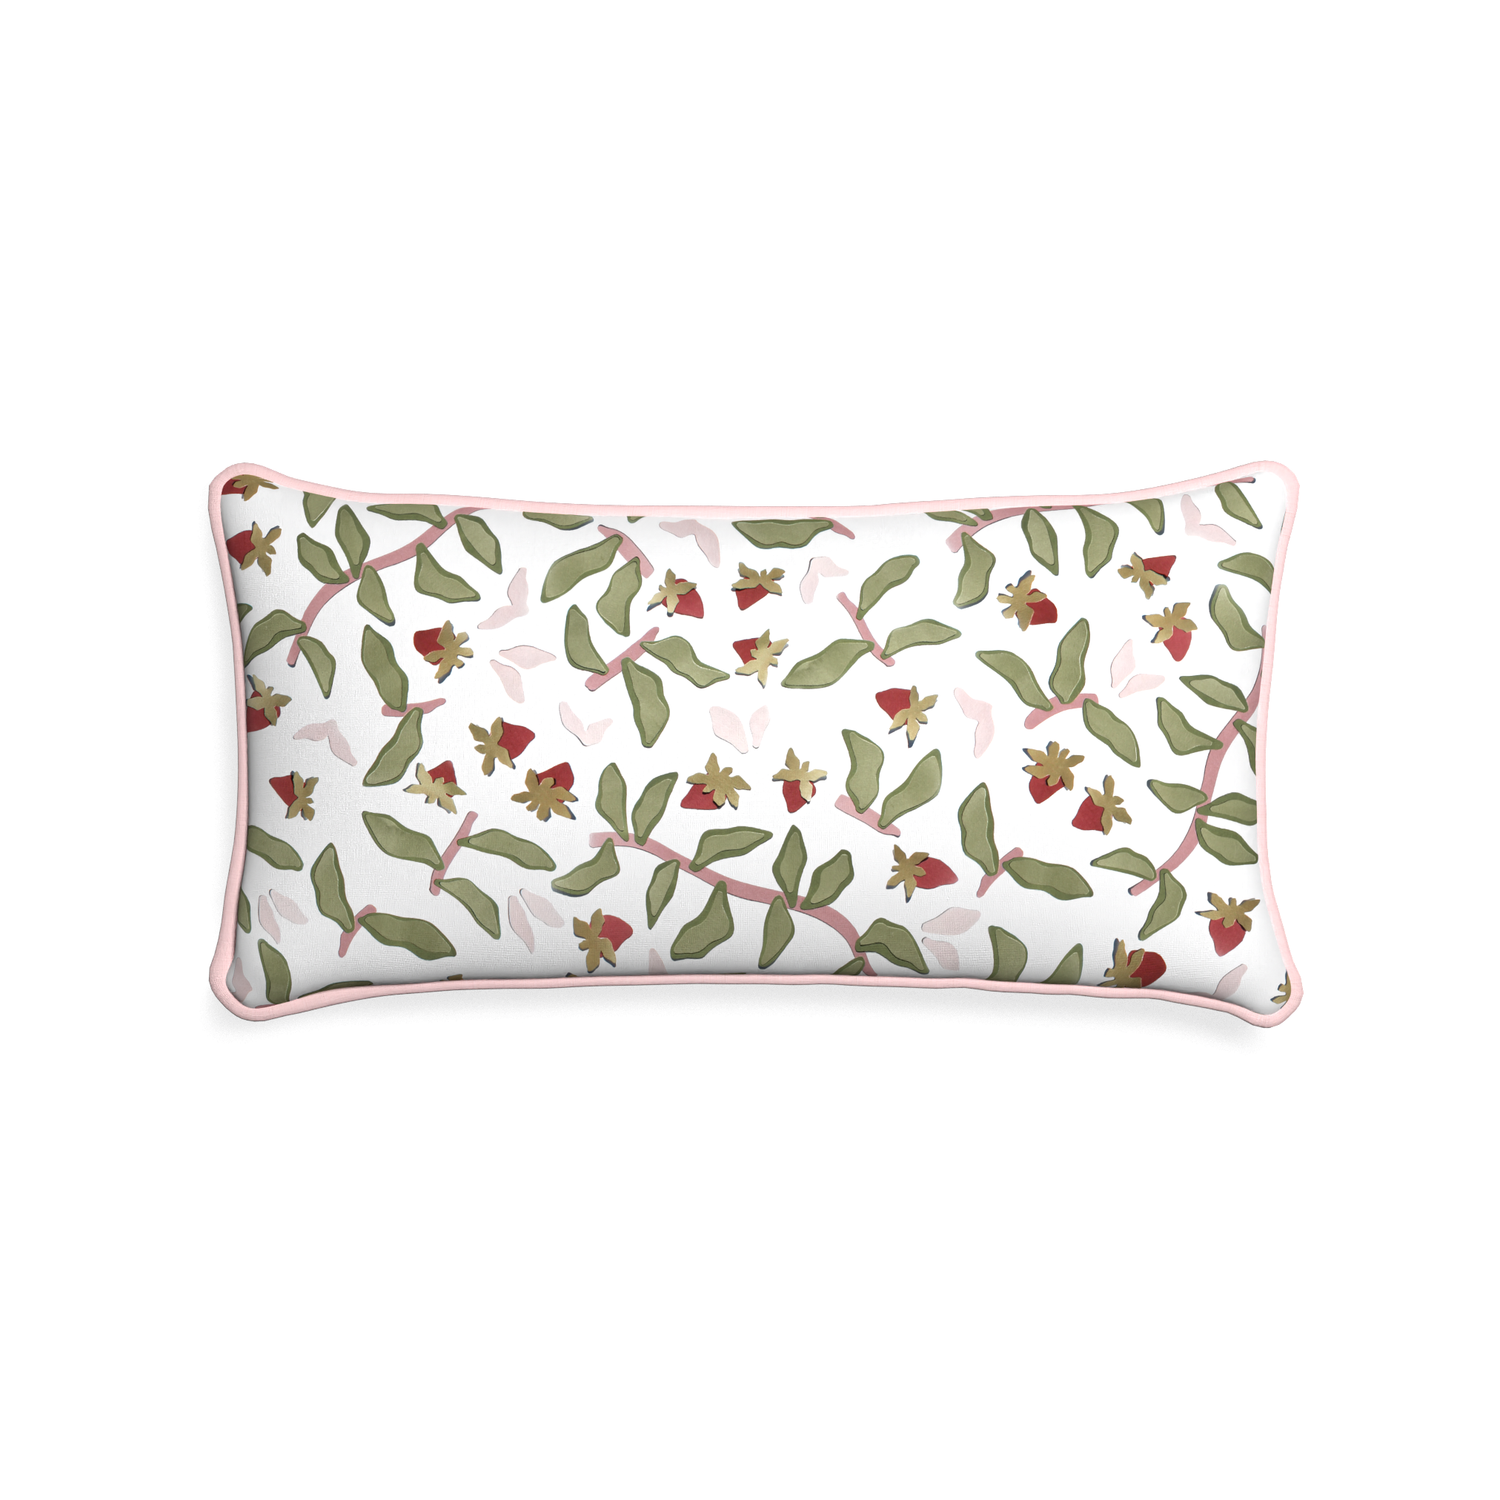 Midi-lumbar nellie custom strawberry & botanicalpillow with petal piping on white background